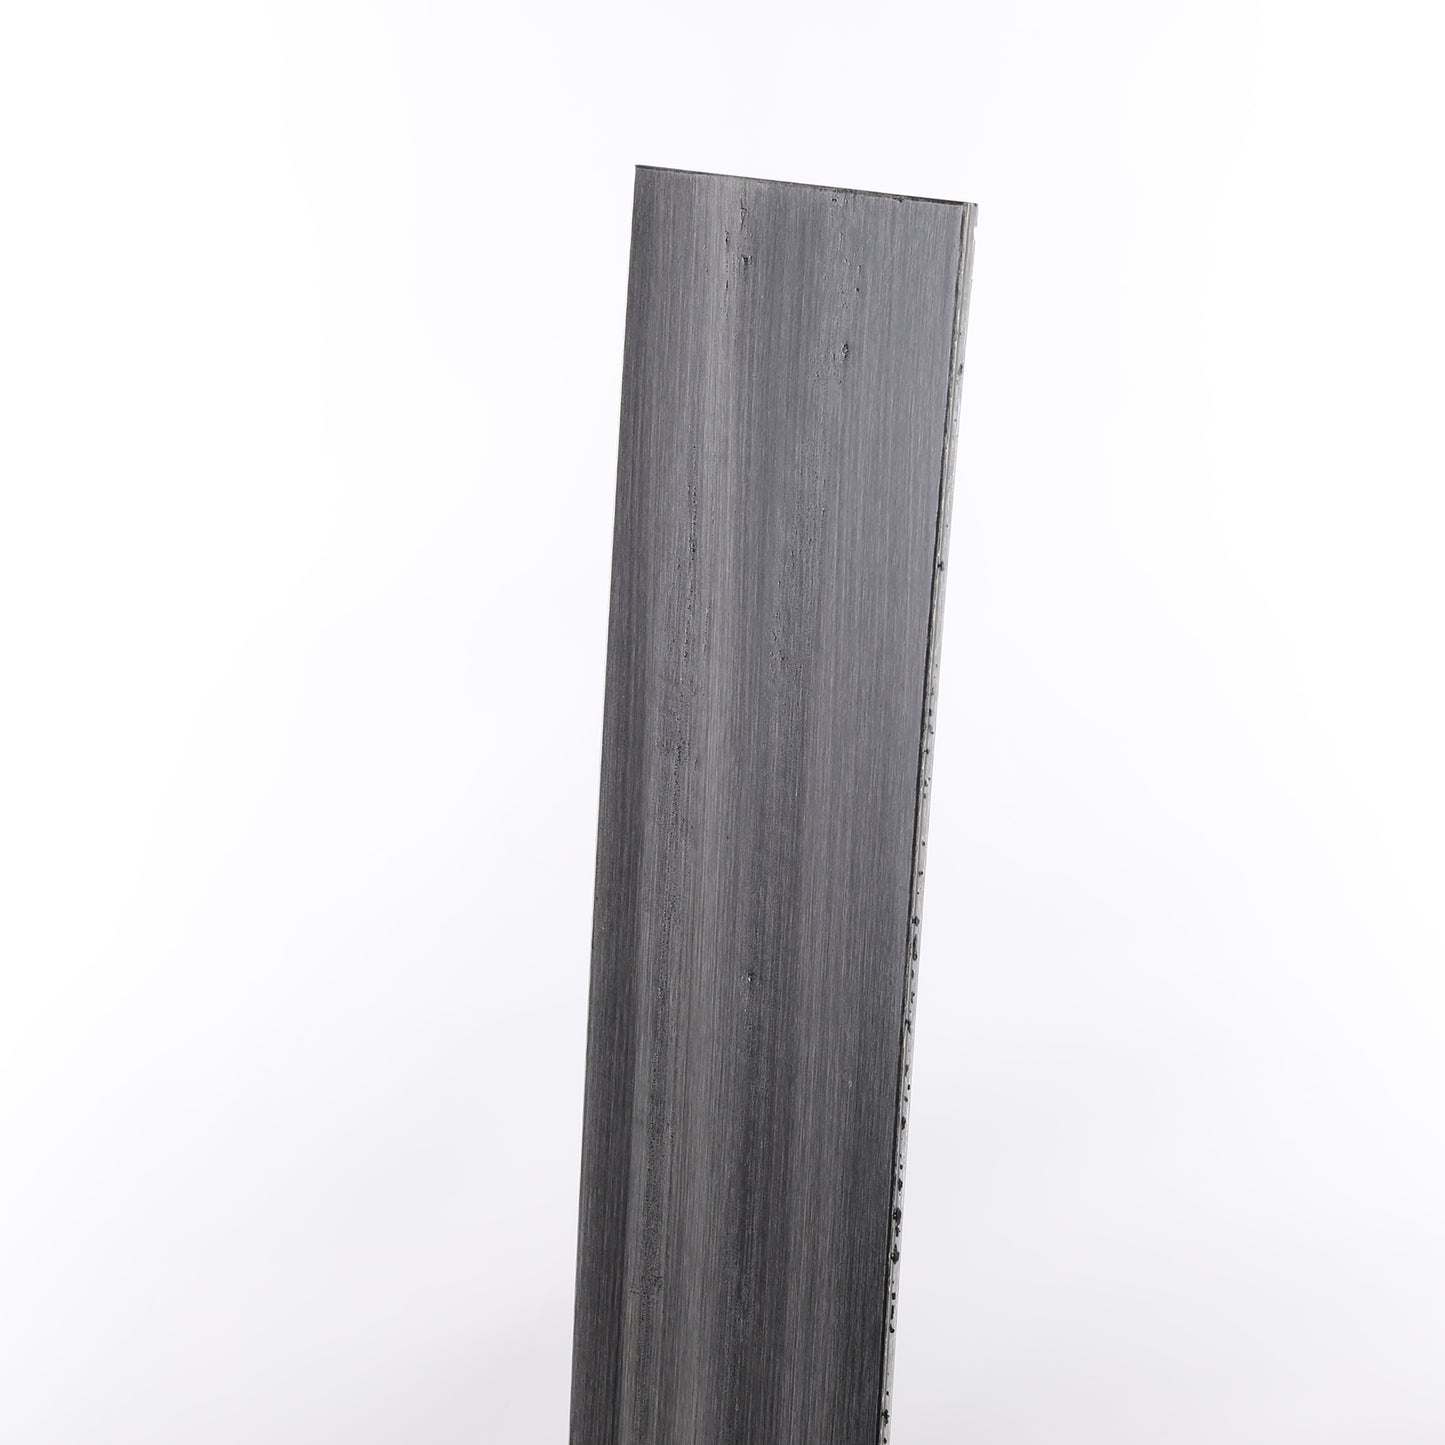 7mm Rustica Waterproof Engineered Strand Bamboo Flooring 5.12 in. Wide x 36.22 in. Long